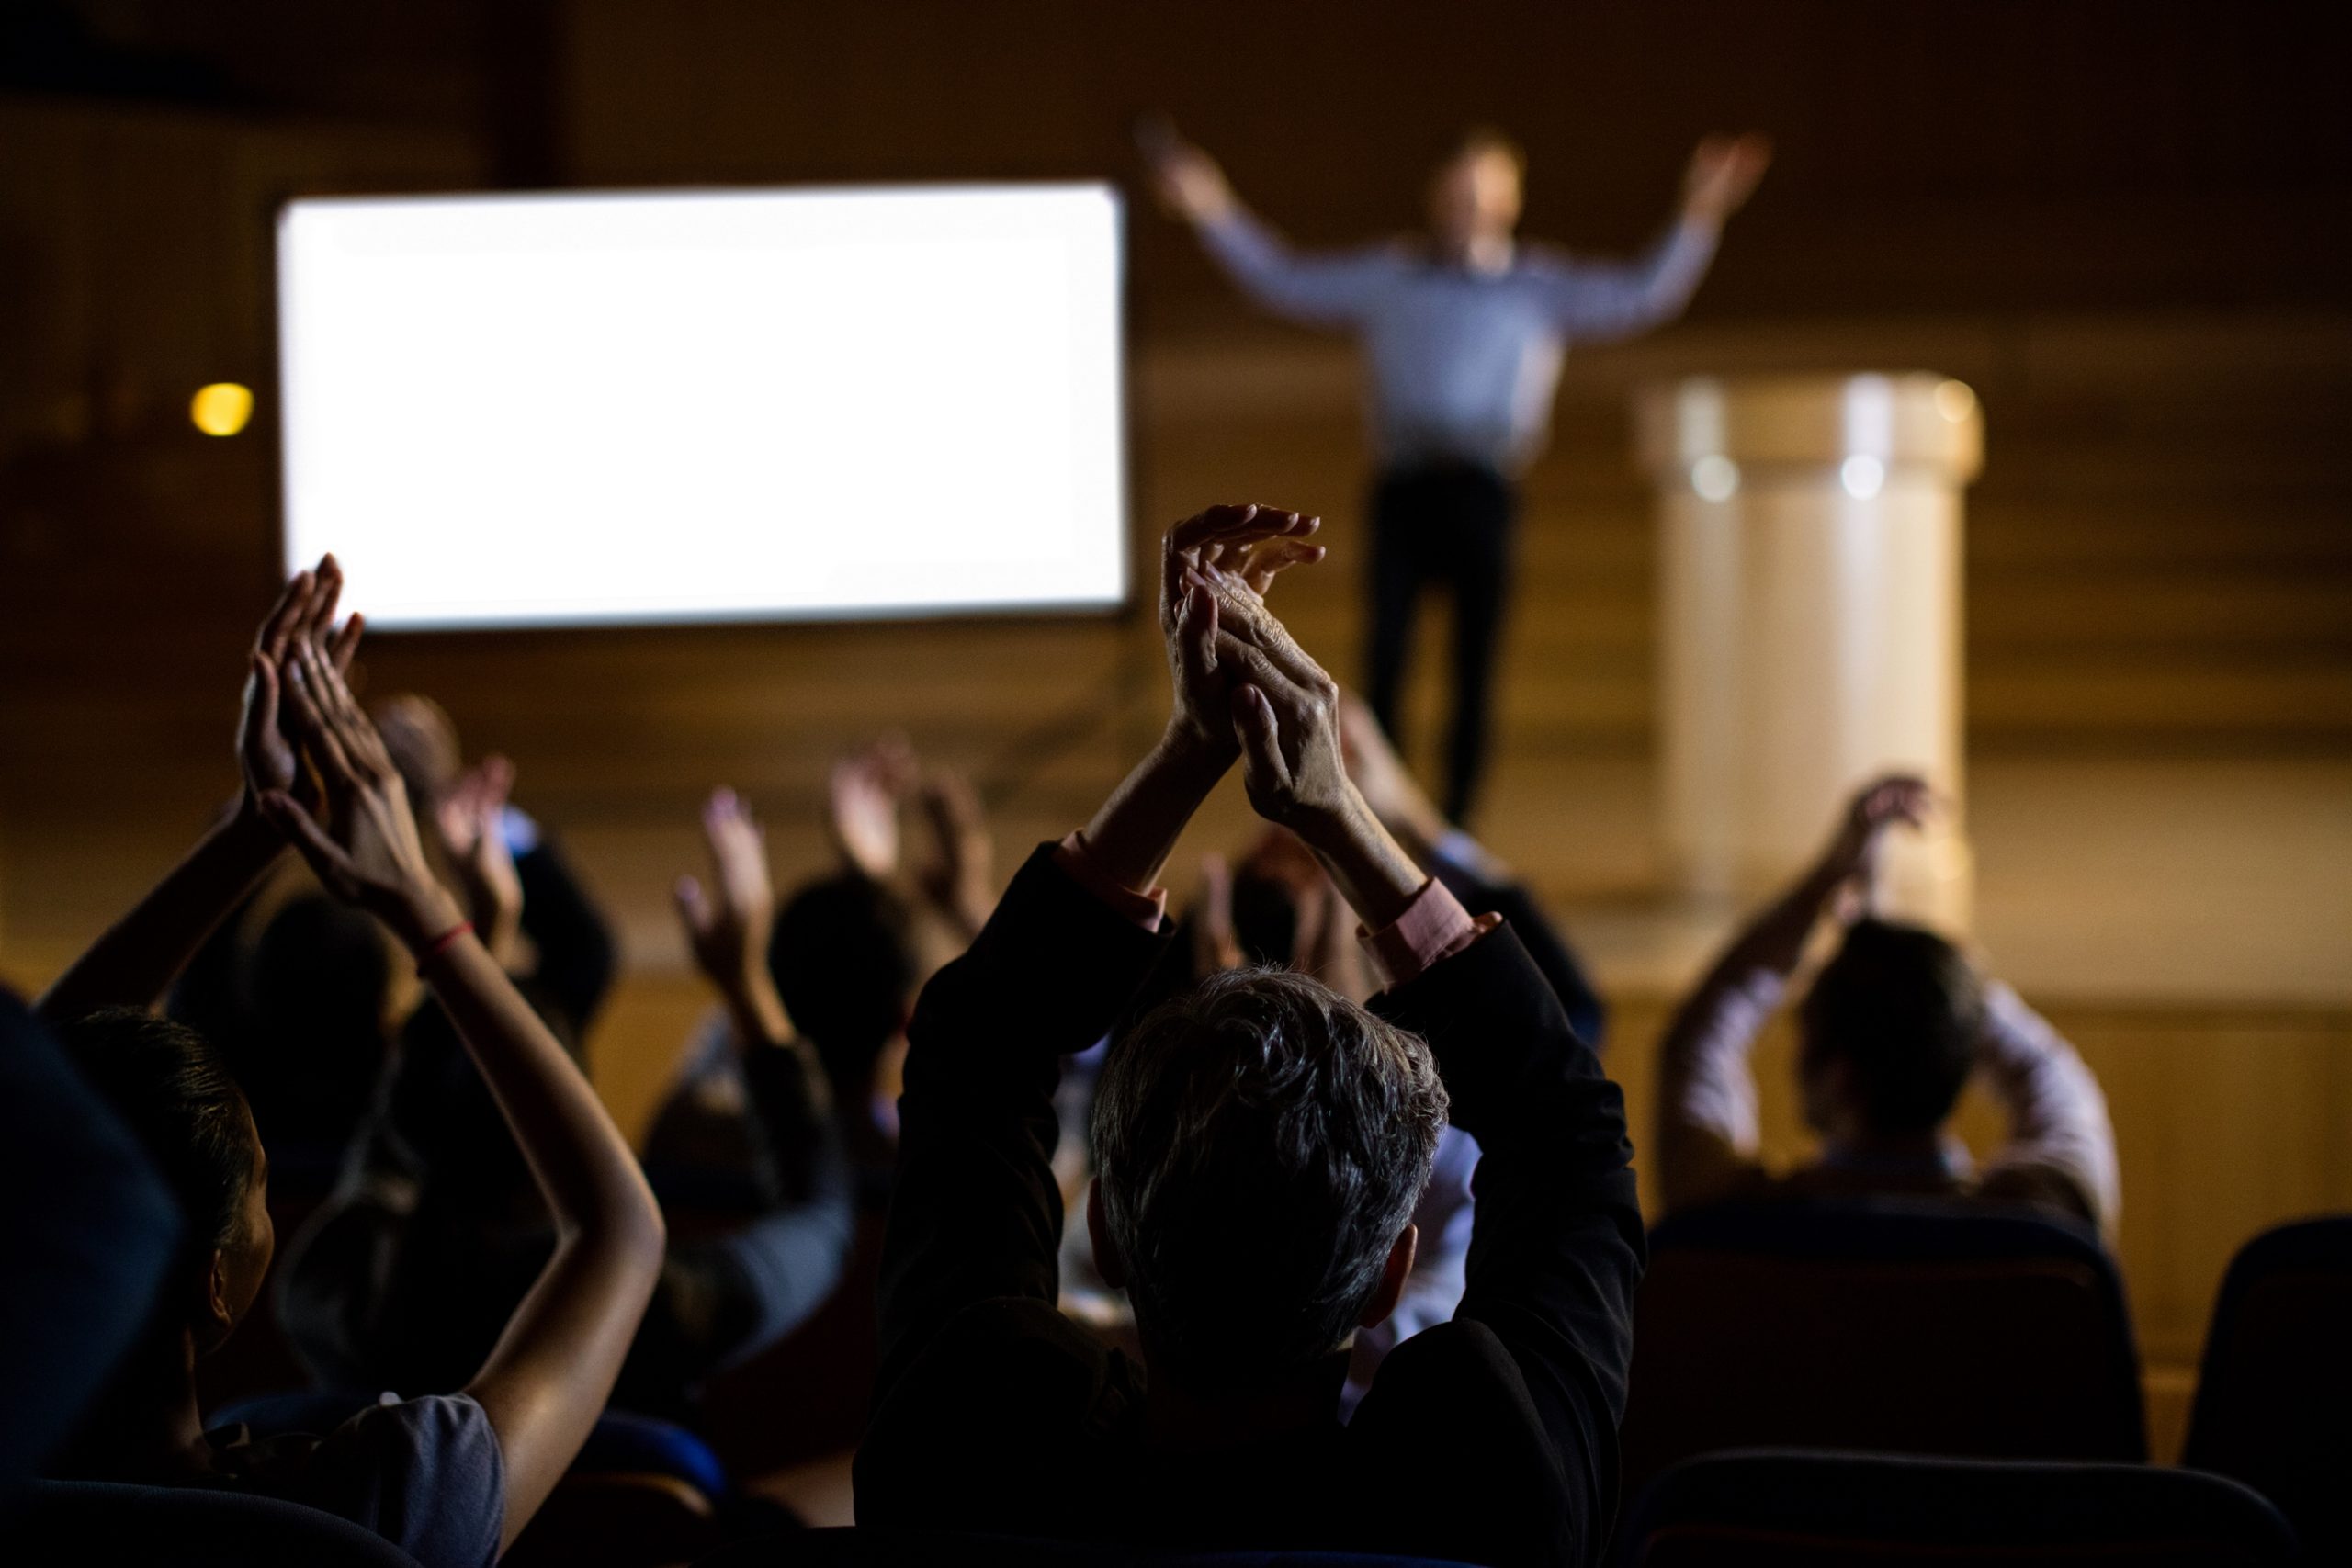 audience-applauding-speaker-after-conference-presentation-1-scaled.jpg